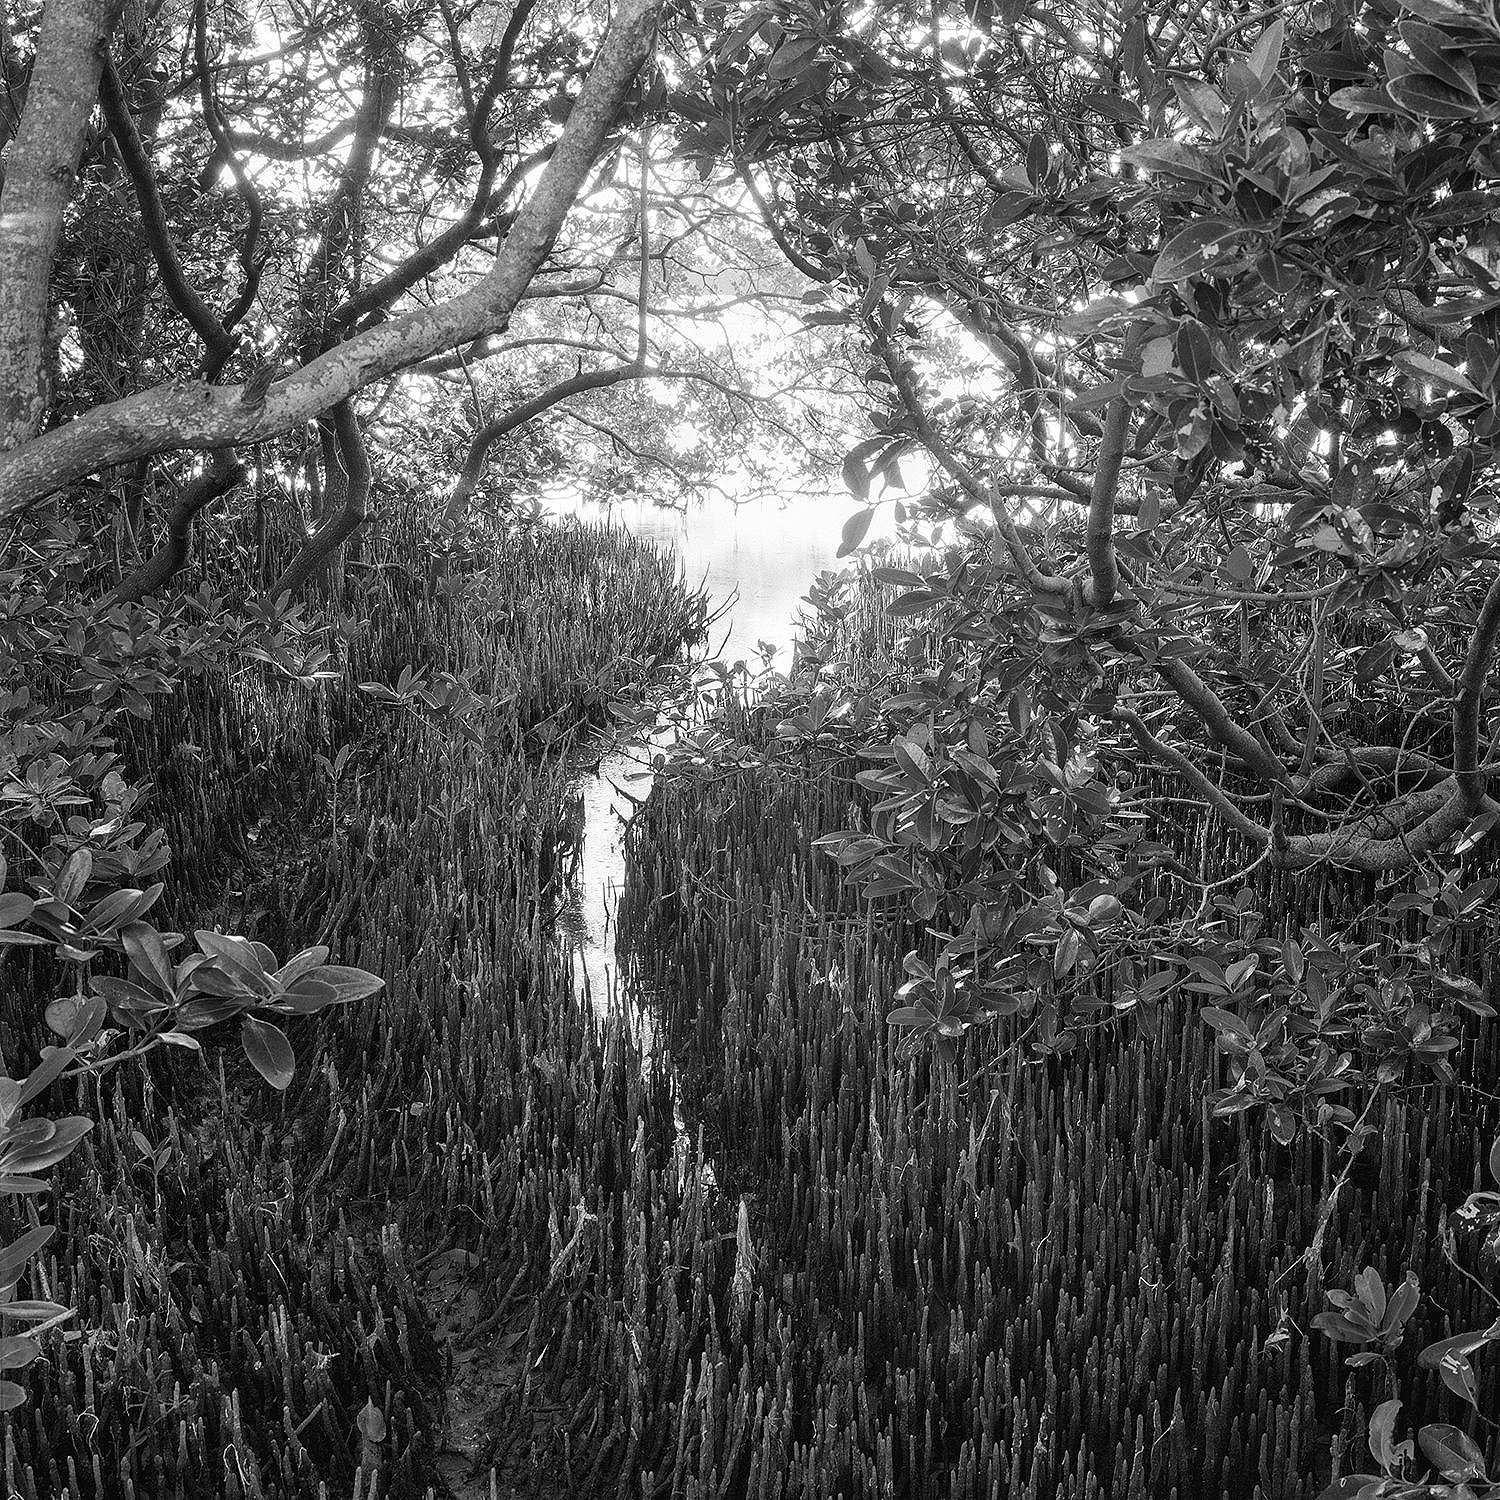 Tidal Creek & Black Mangrove Roots, Malone Island